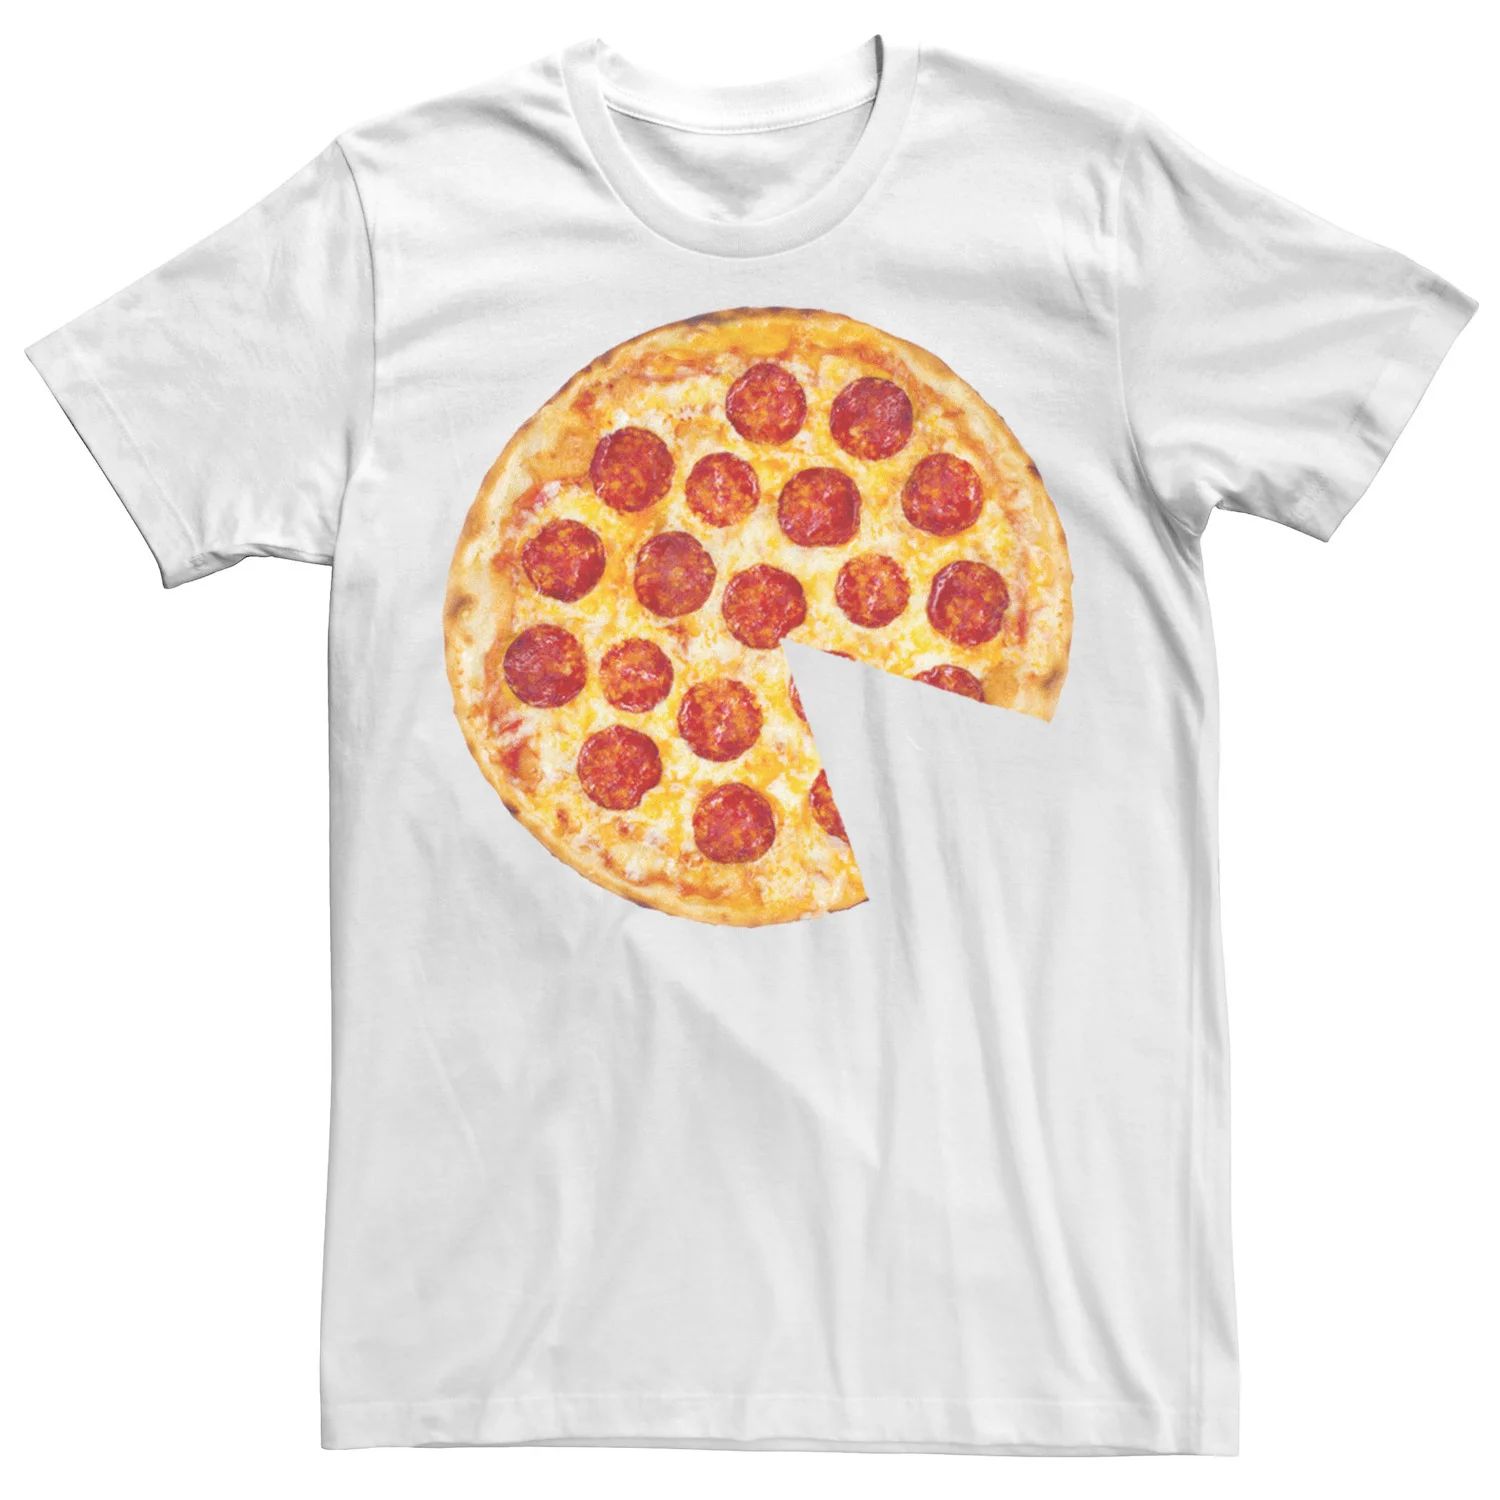 Мужская футболка с рисунком Pepperoni Pizza и портретом Licensed Character